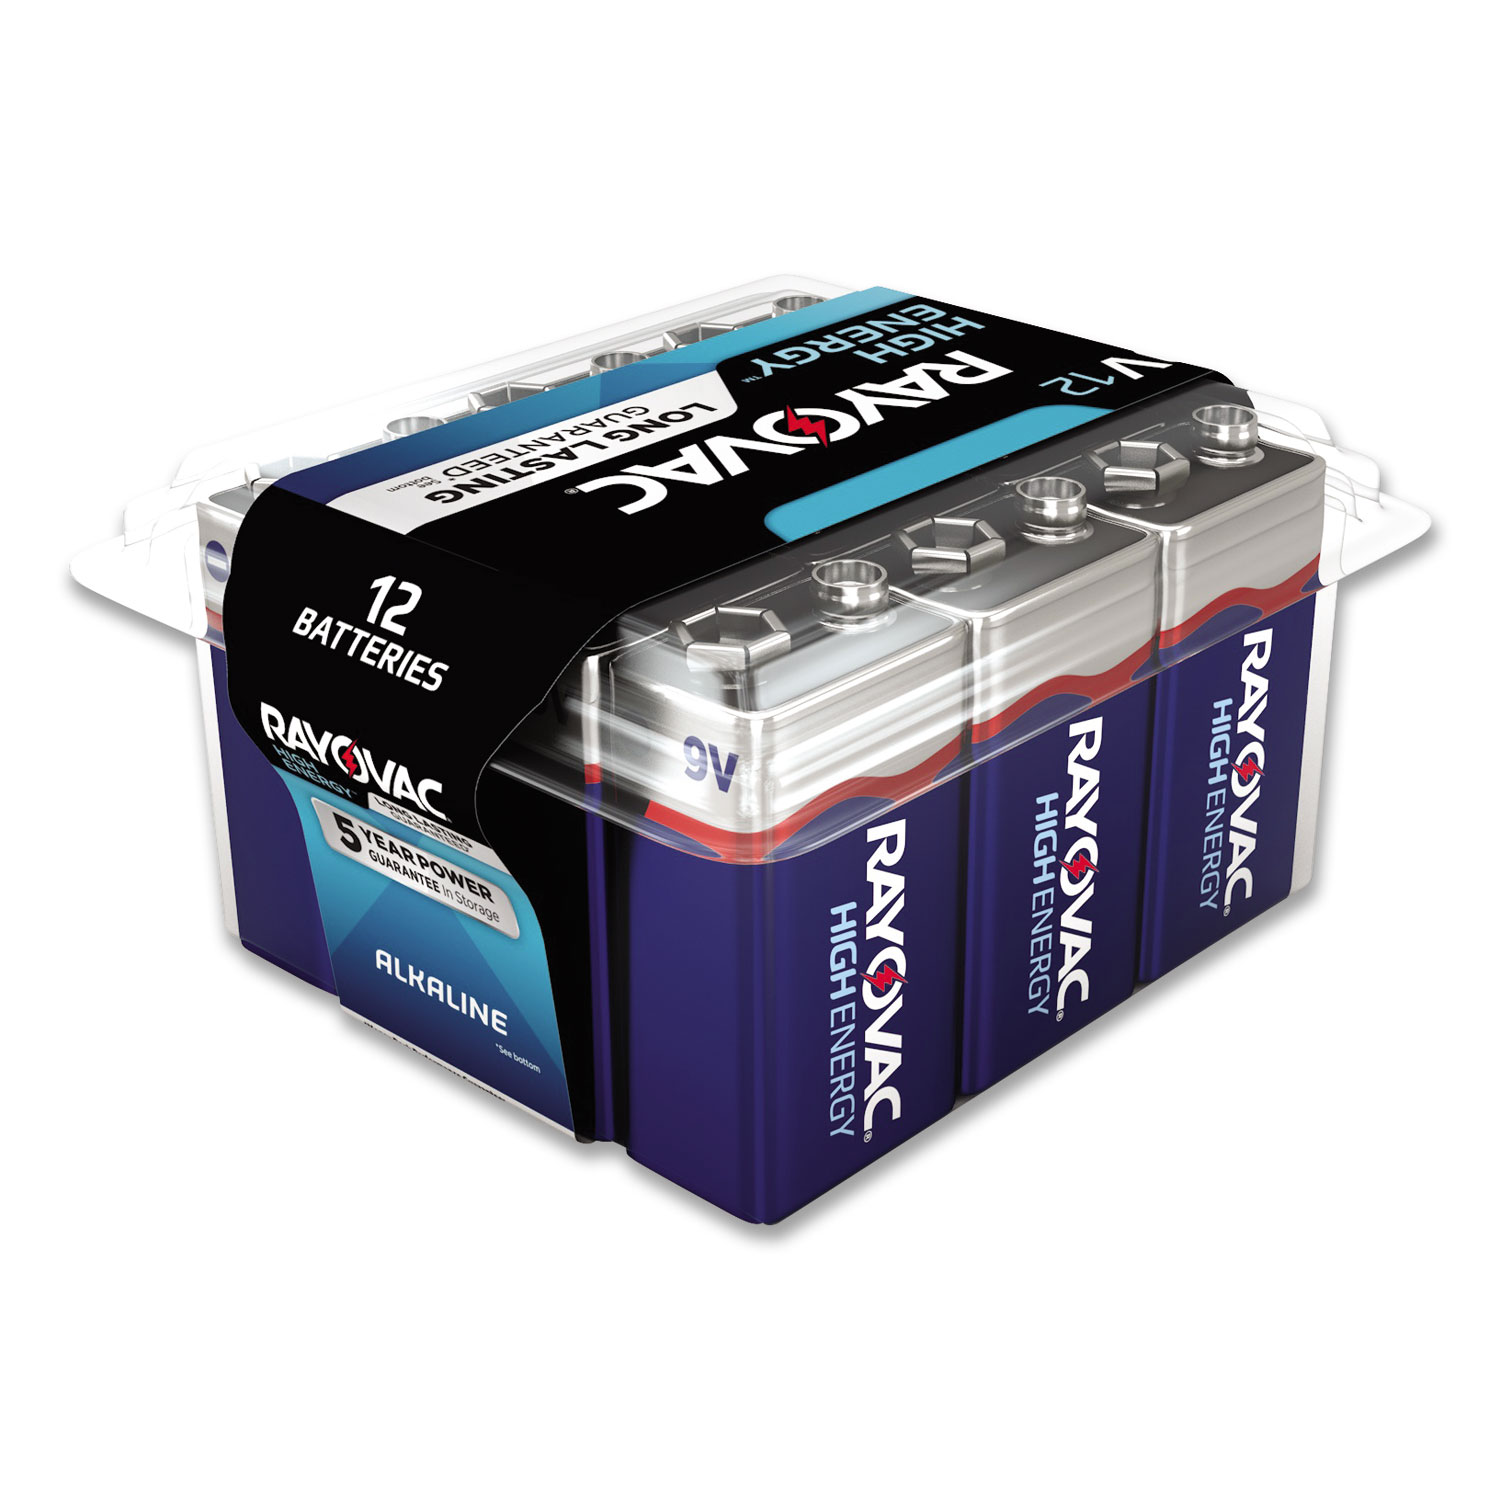 Rayovac Alkaline 9v Batteries 12pack Raya160412ppj